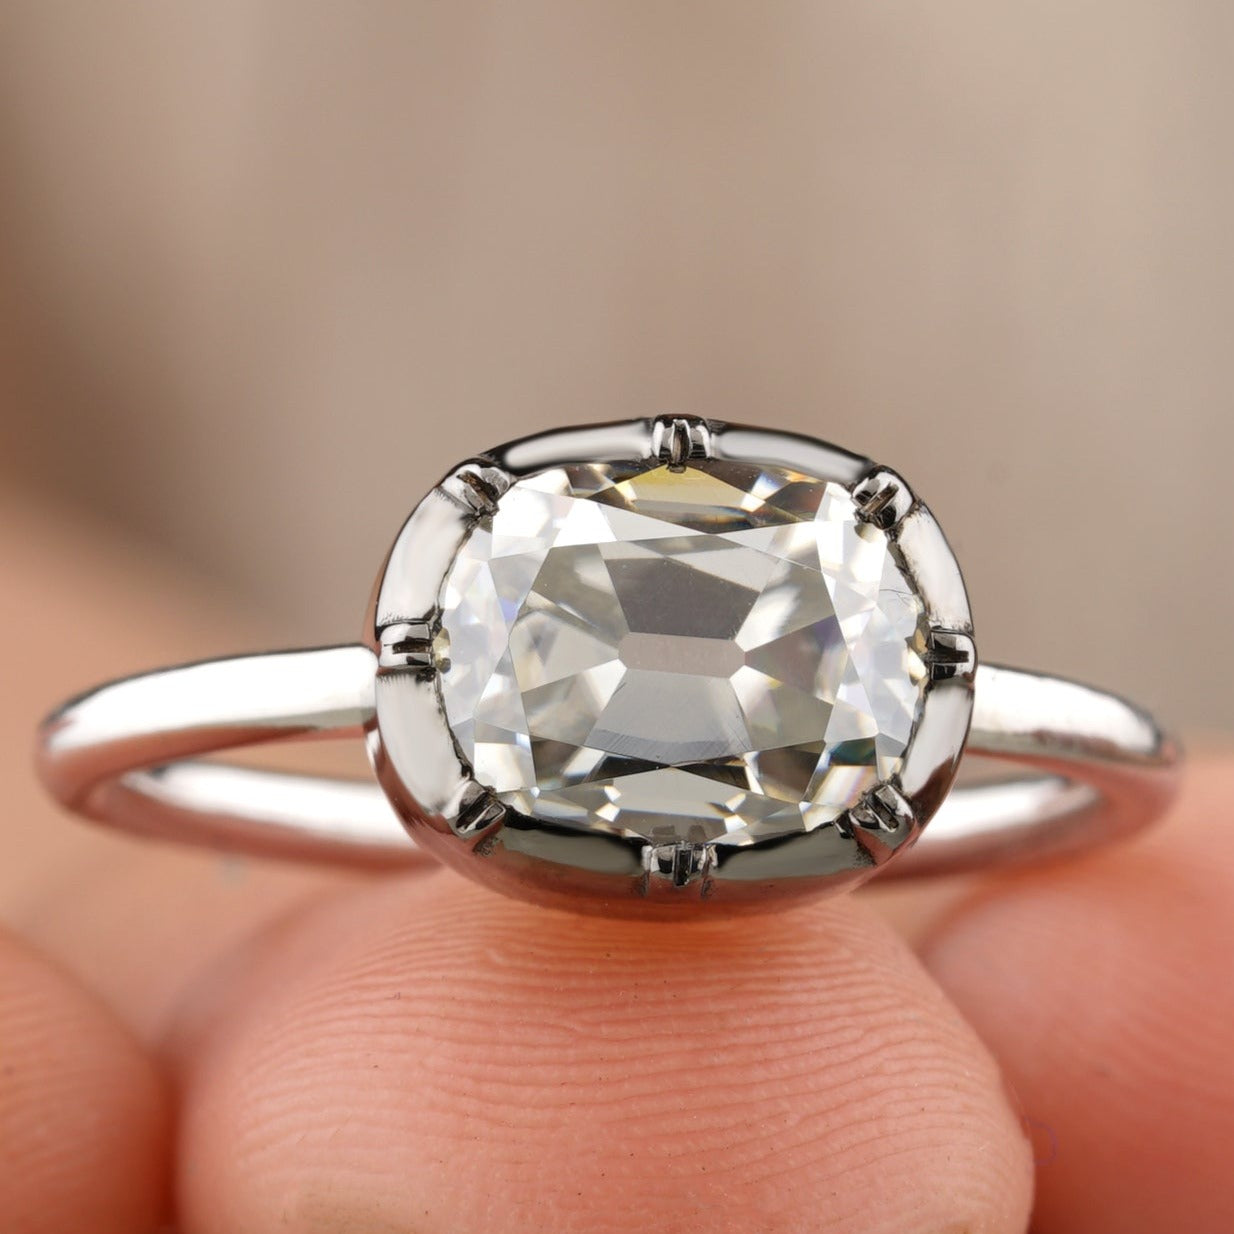 Georgia Victorian Style Engagement Ring - Eurekalook